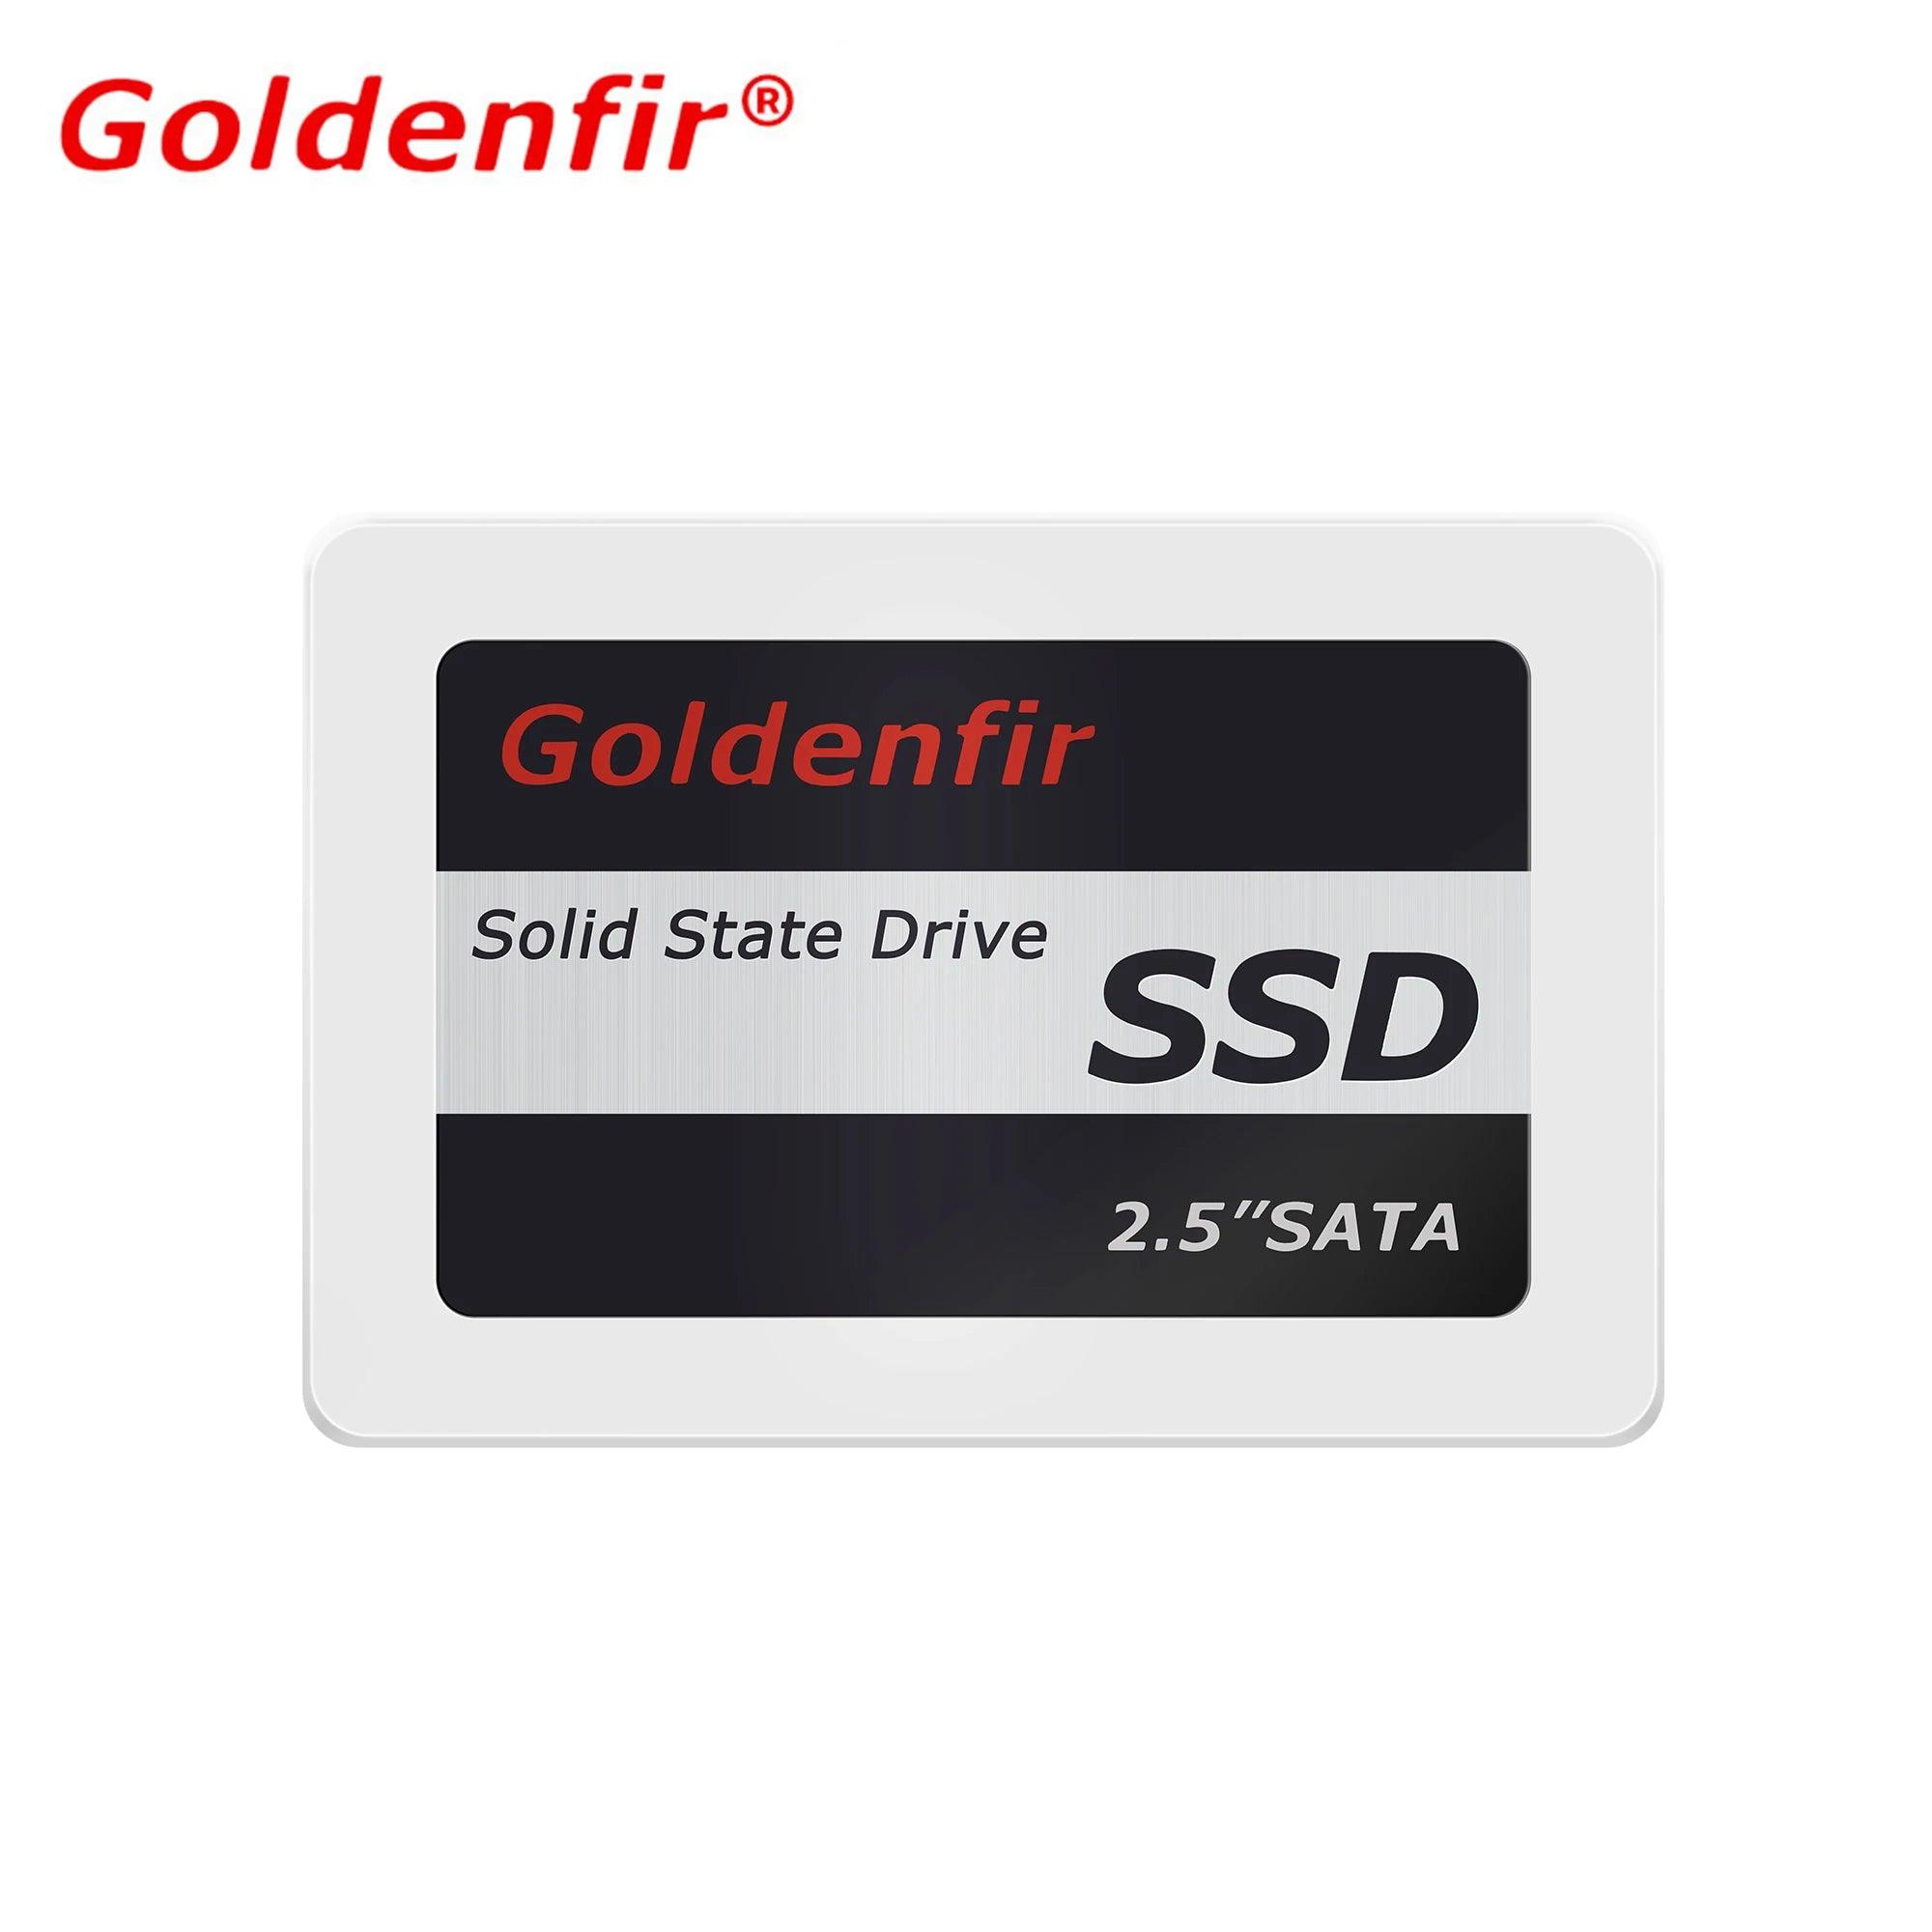 Goldenfir Brand 2.5" SSD - Enhance Your Storage and Workflow Speeds  ourlum.com 360GB CHINA 